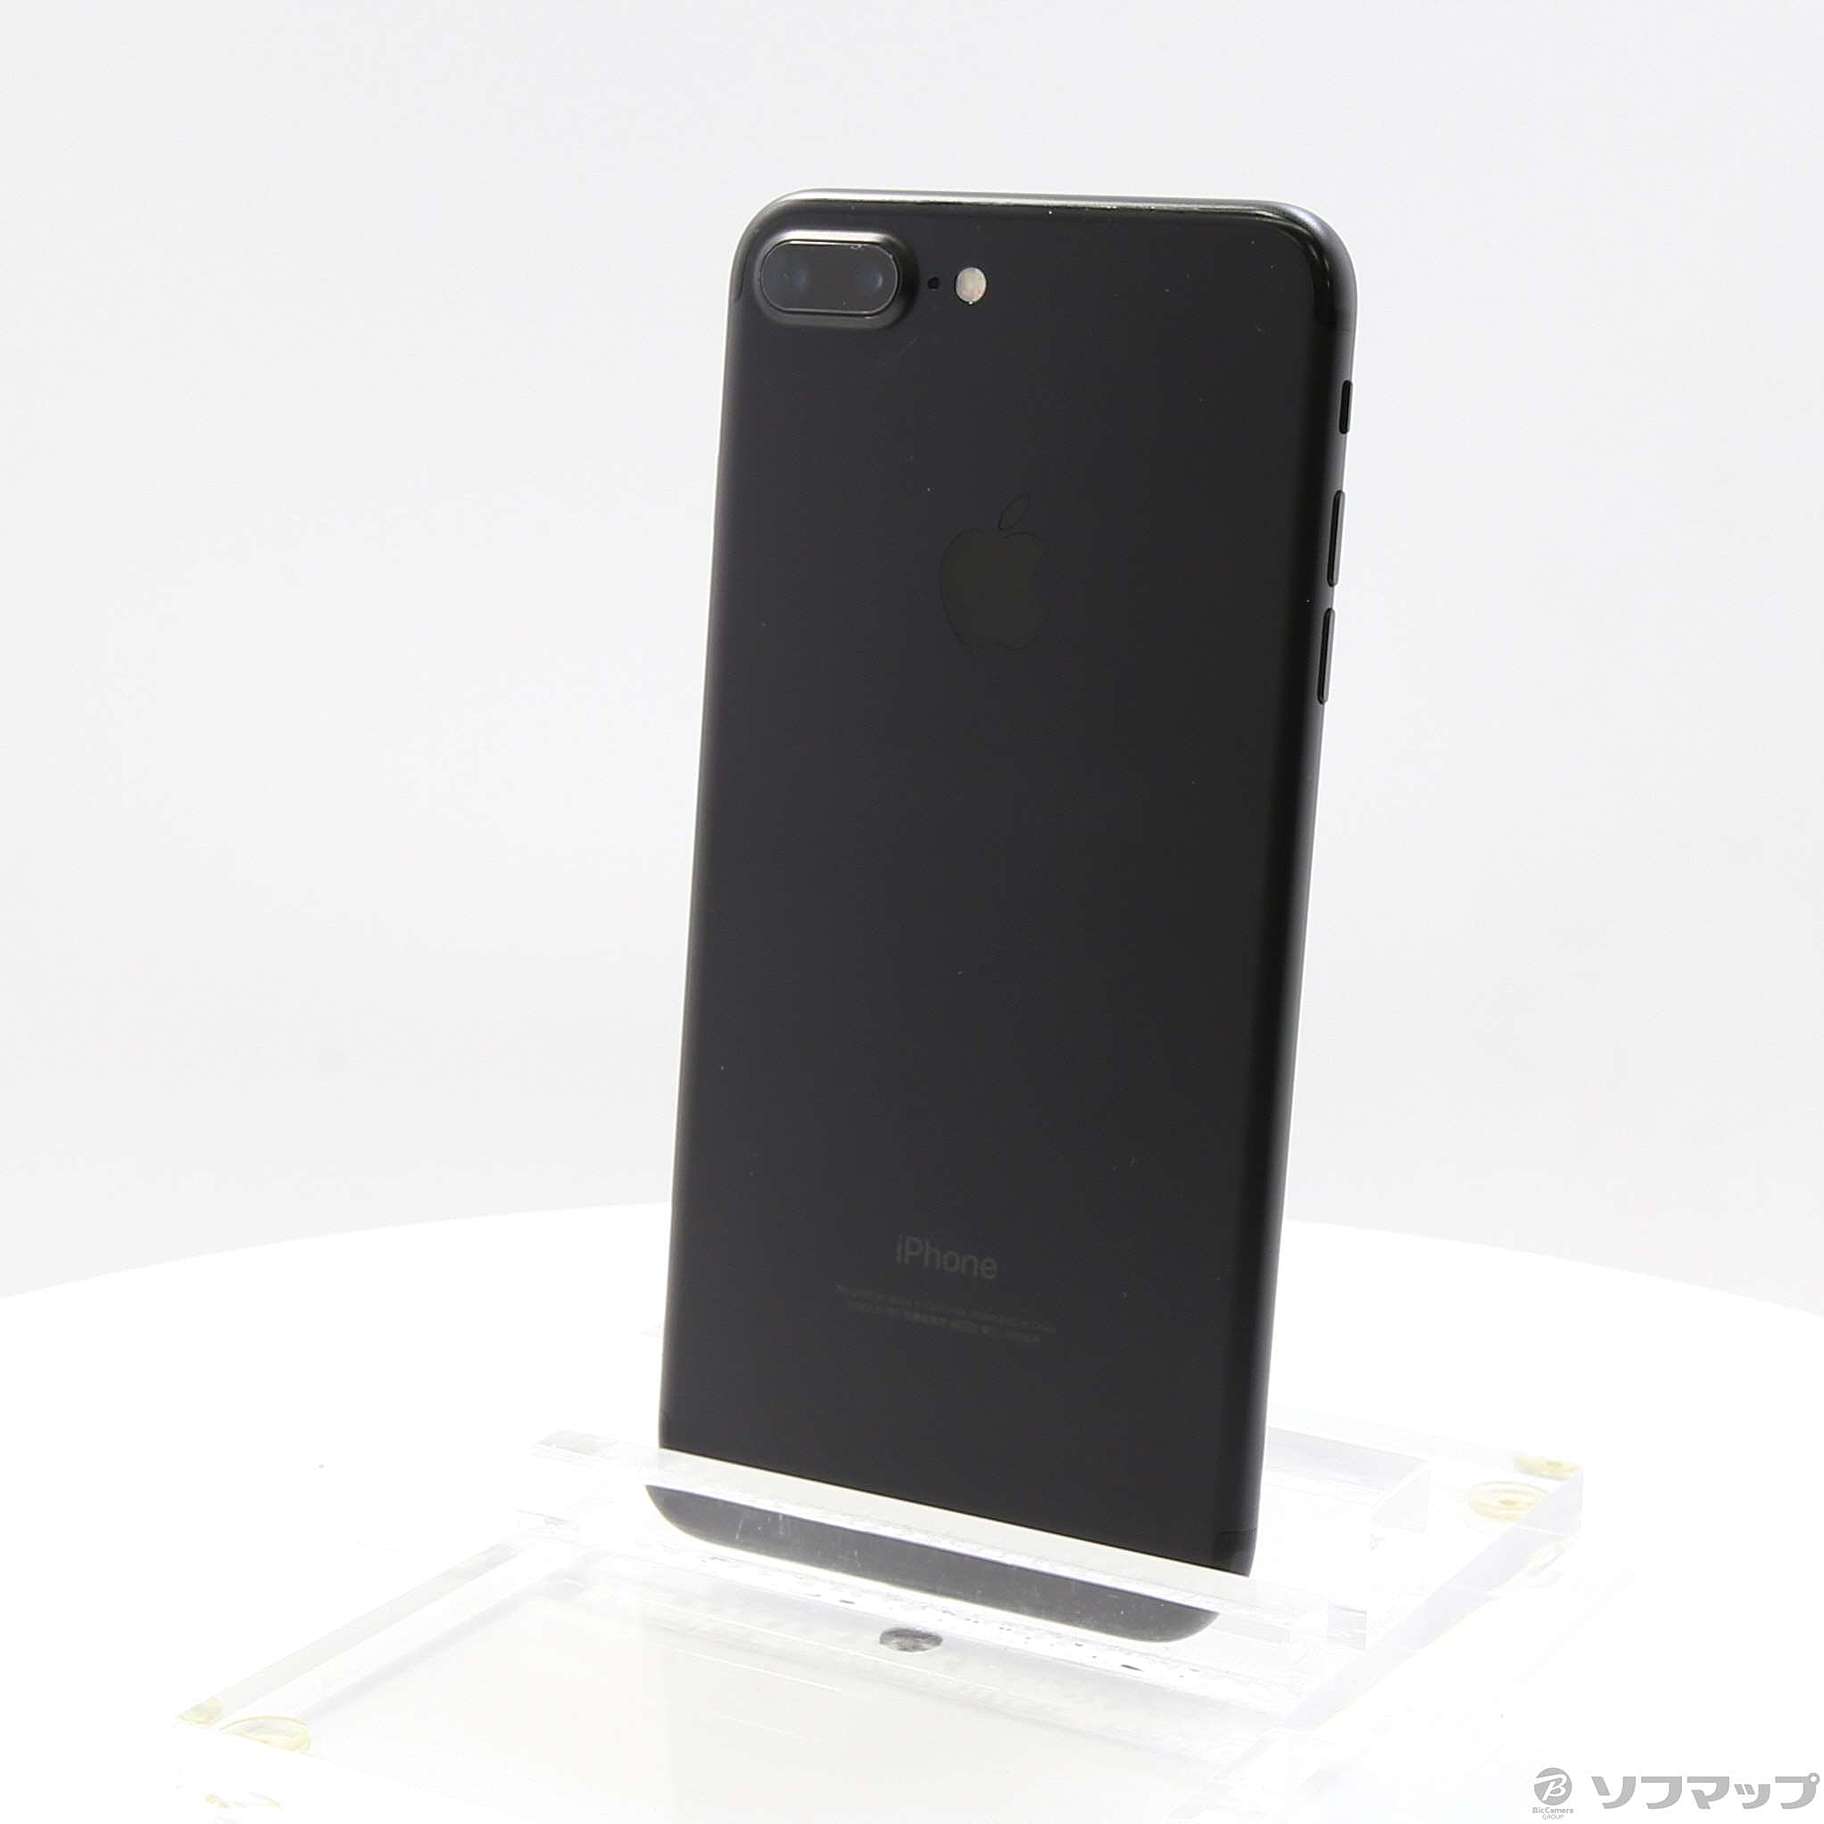 iPhone 7 Plus Black 128 GB Softbank - スマートフォン本体